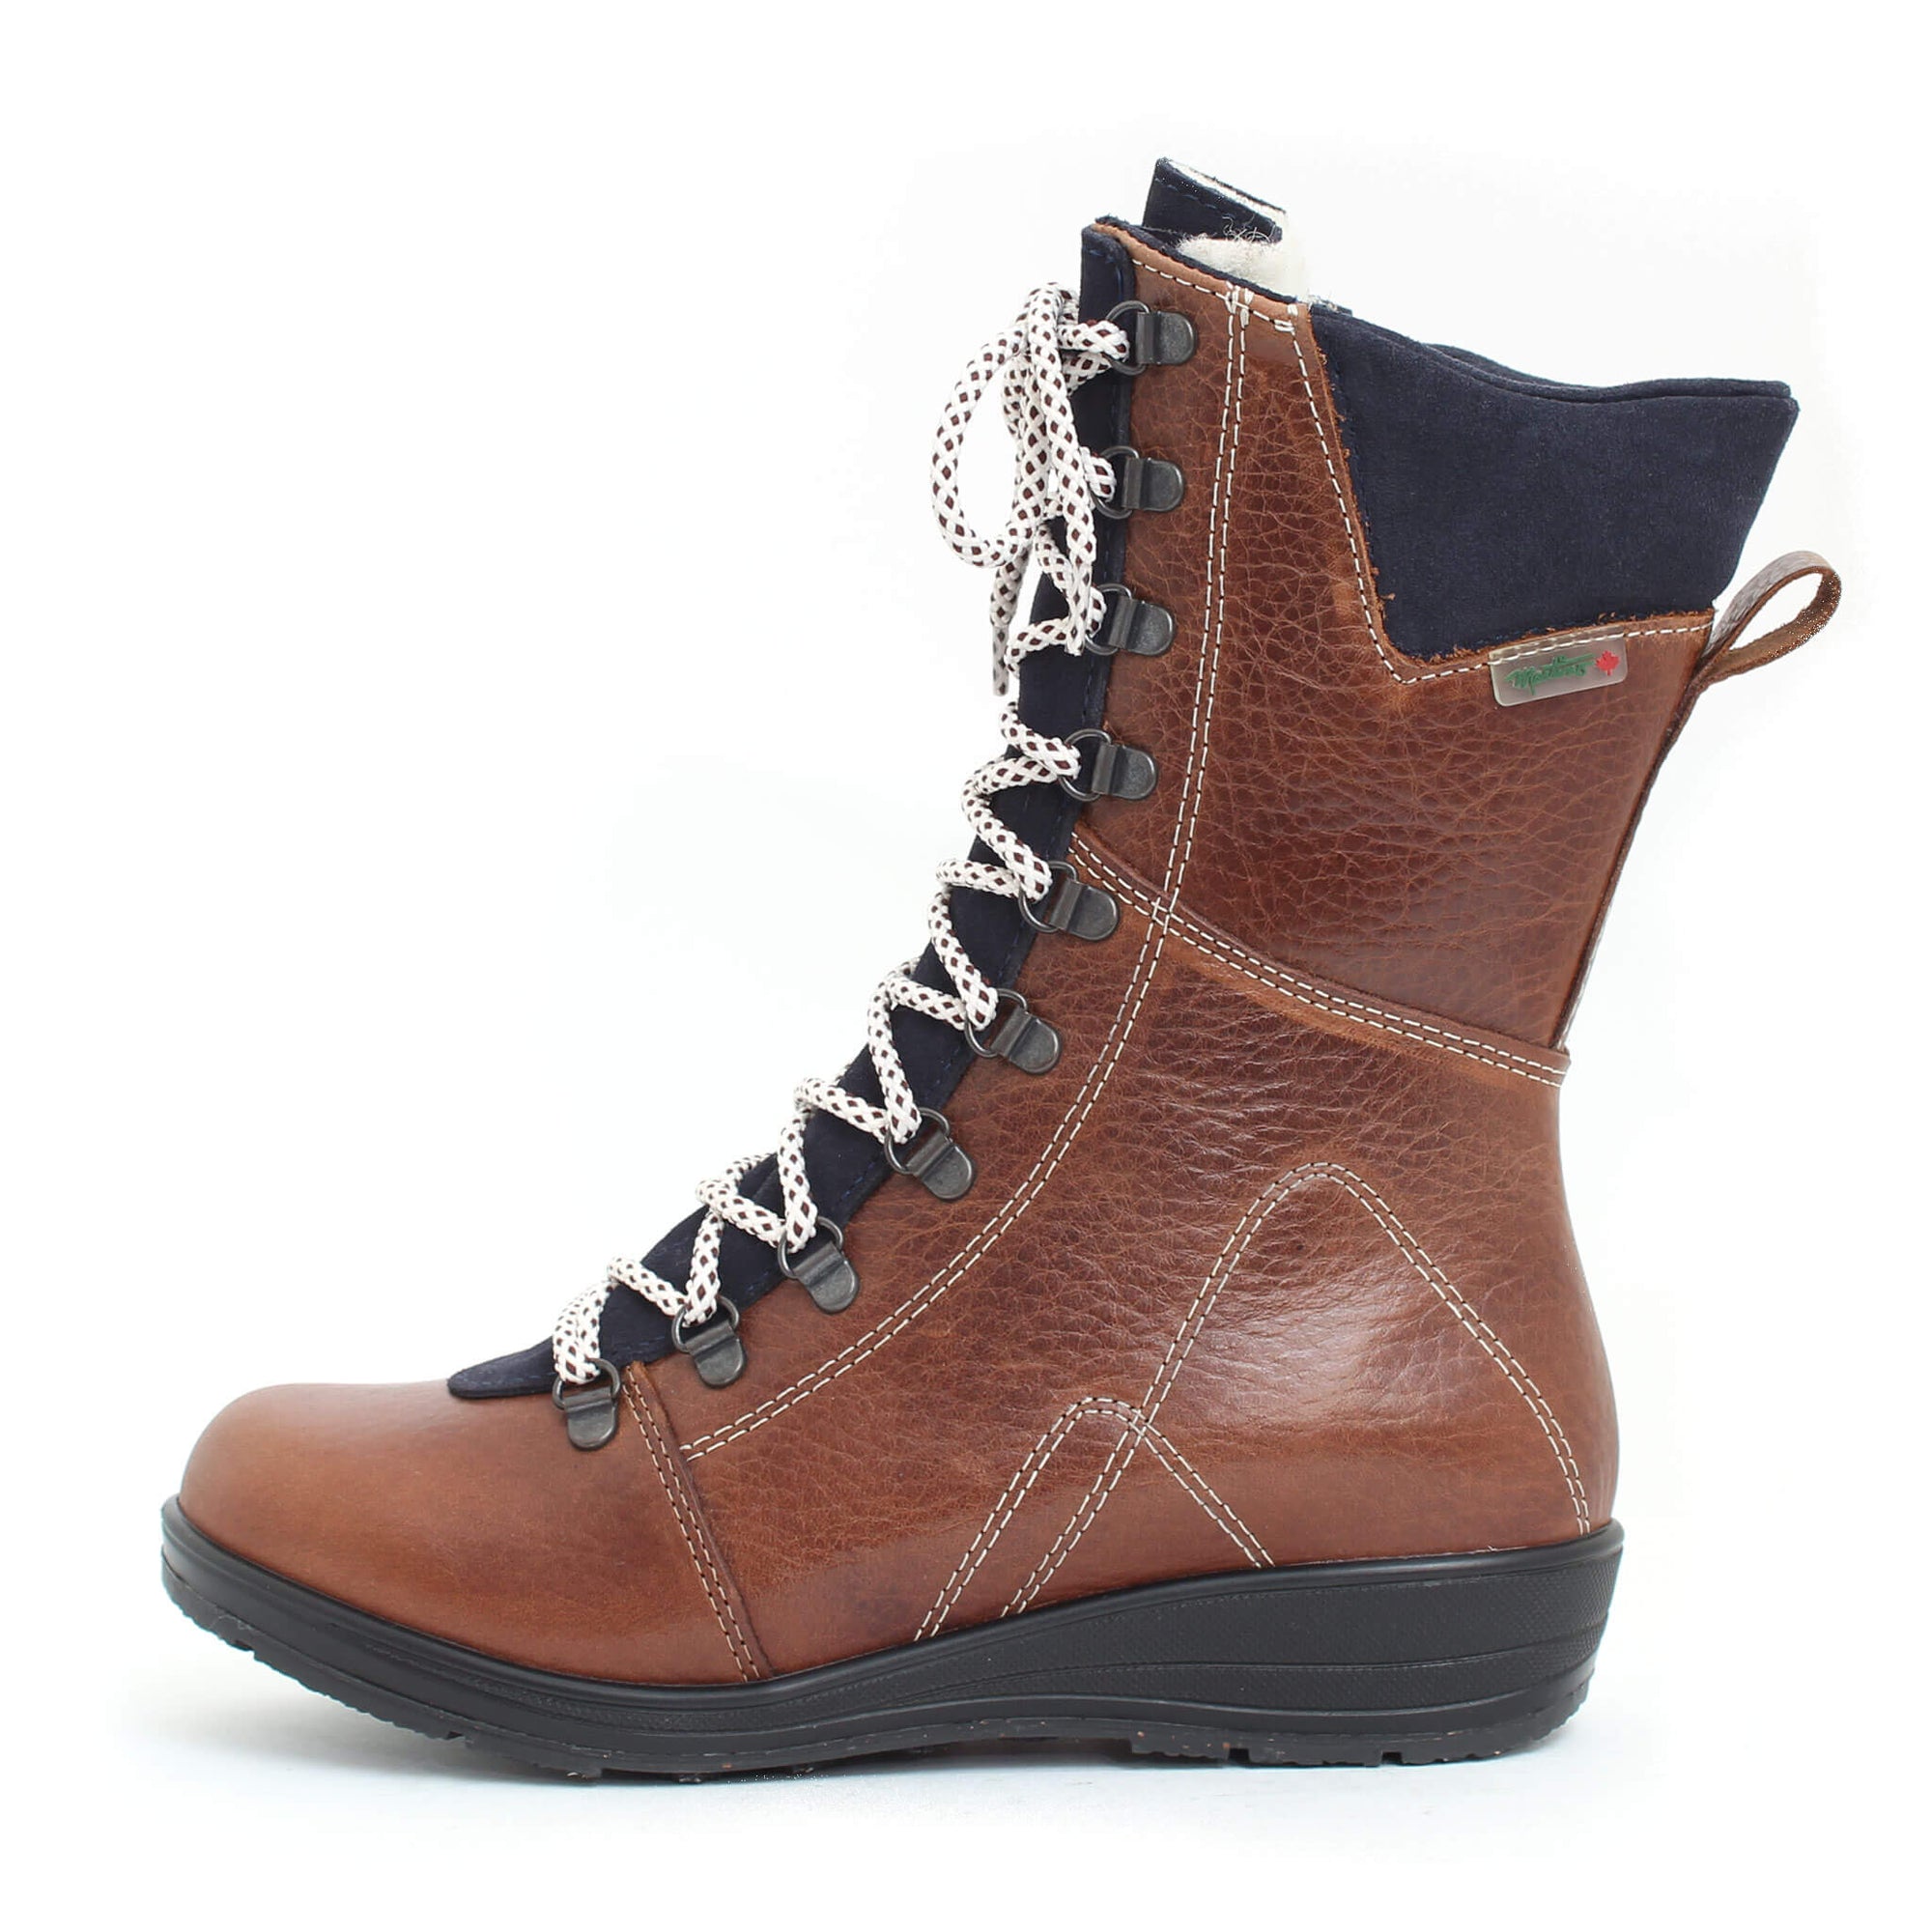 Banff winter boot for women - Olive 